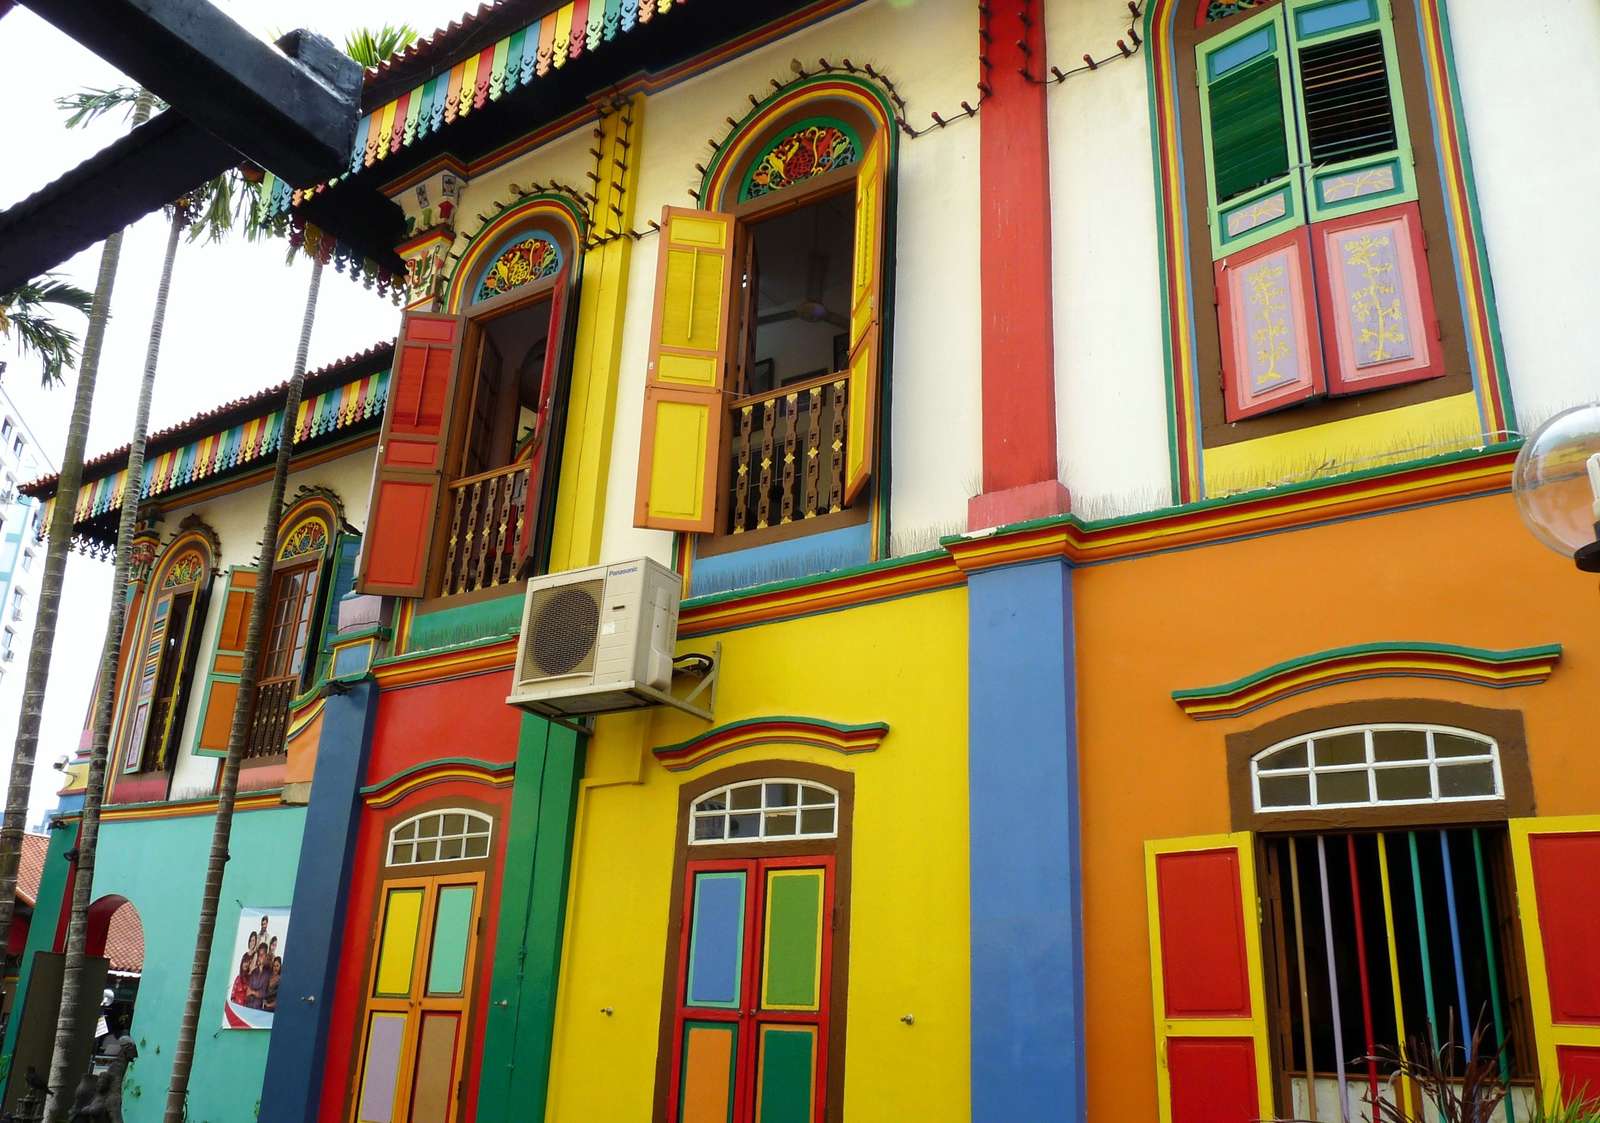 Barevné domy v Singapuru (arabská ulice) online puzzle